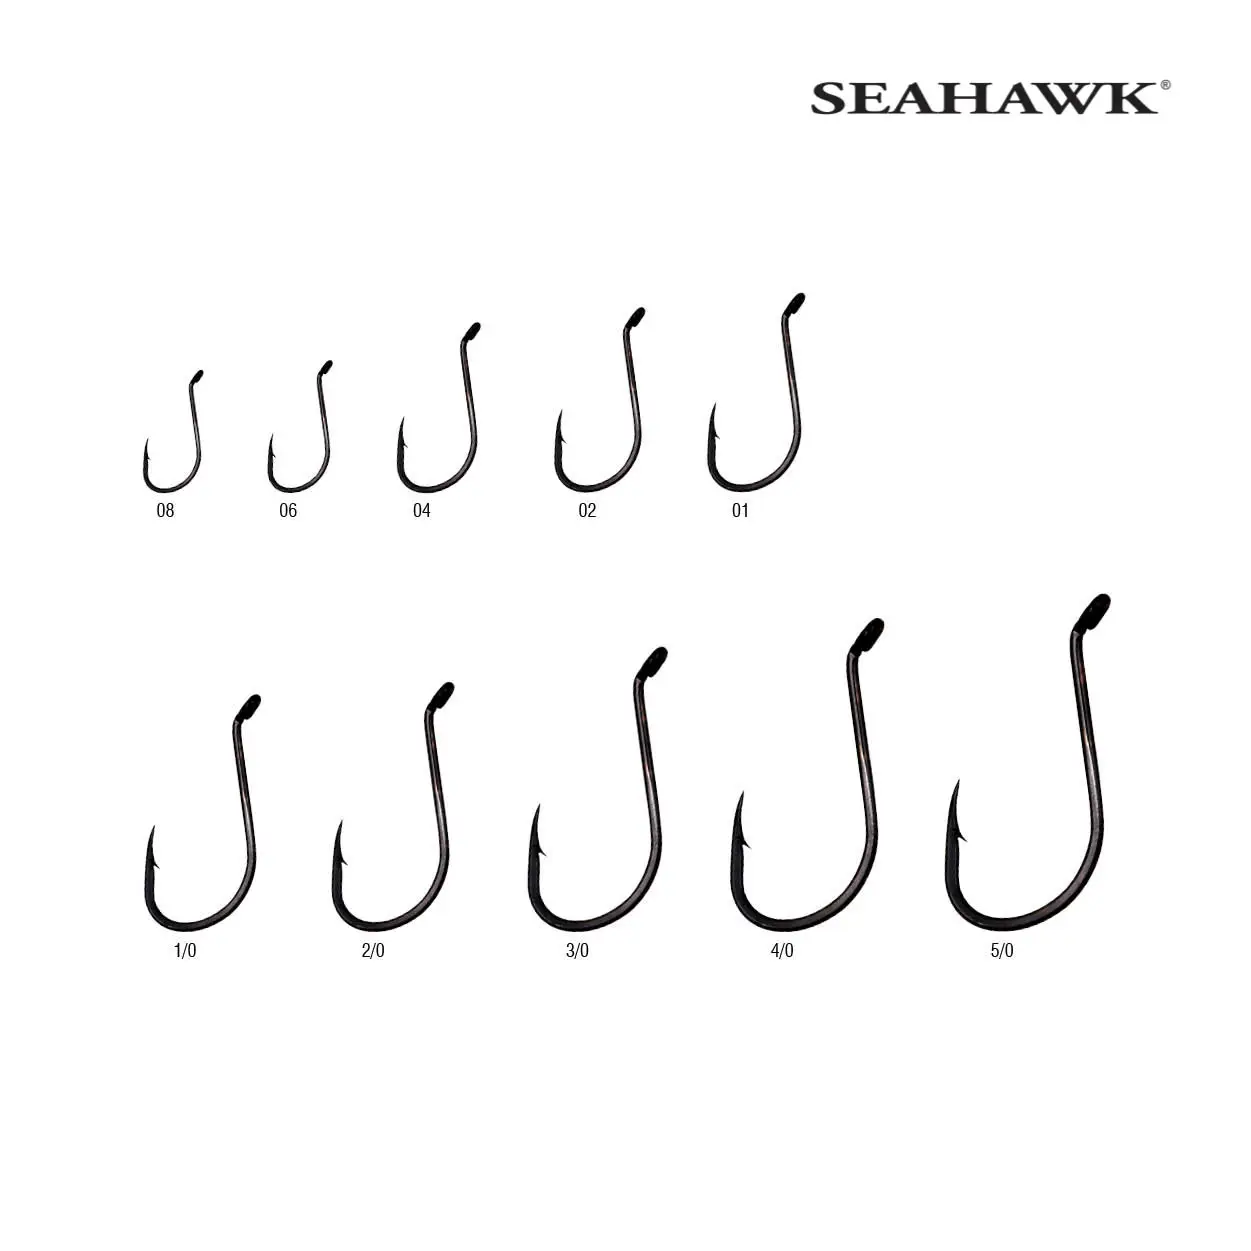 https://seahawkfishing.com/wp-content/uploads/2020/07/Seahawk-Beak-Hook-MS4310HC-Ful.jpg.webp